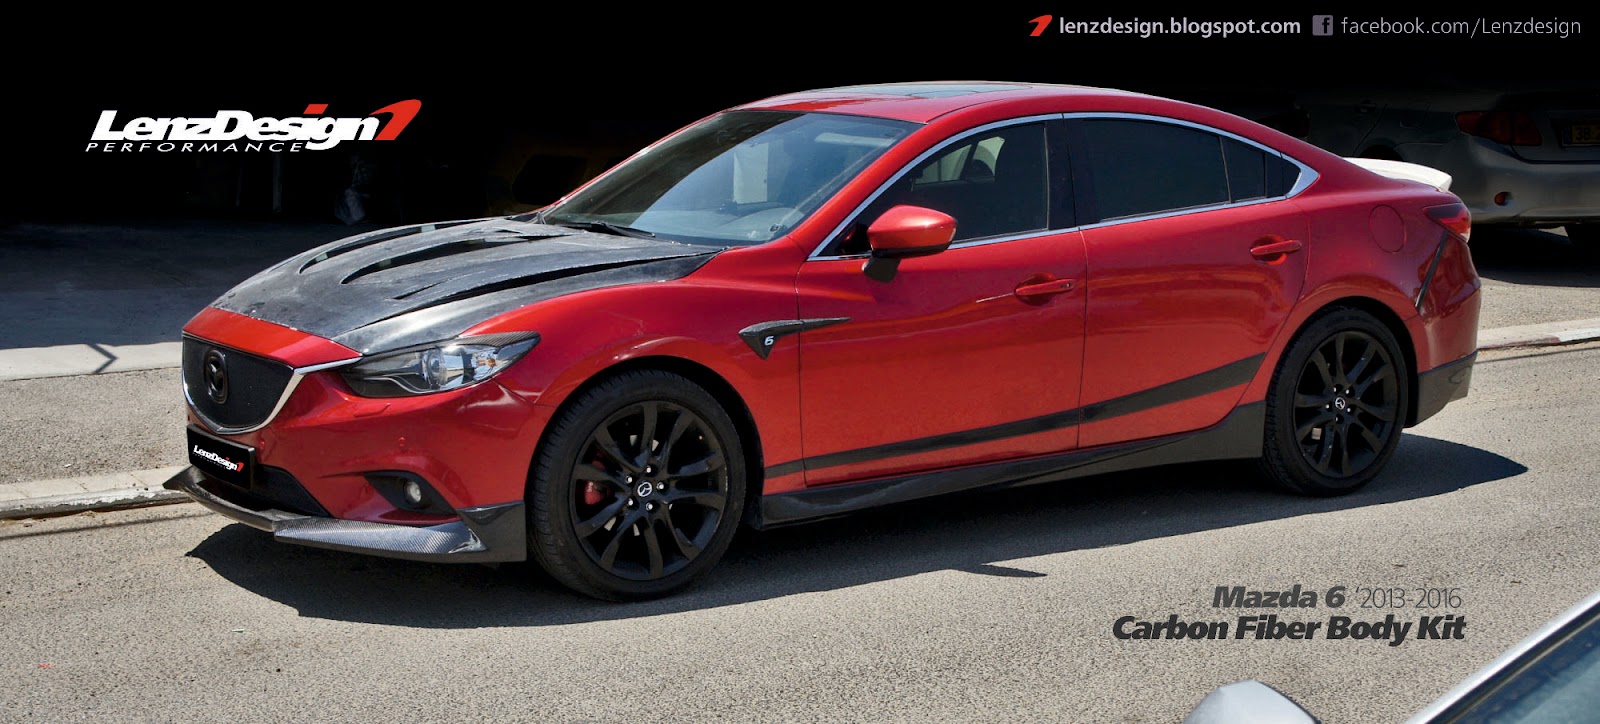 Lenzdesign Performance | Custom Body Kit & Carbon Fiber Parts: Mazda 6